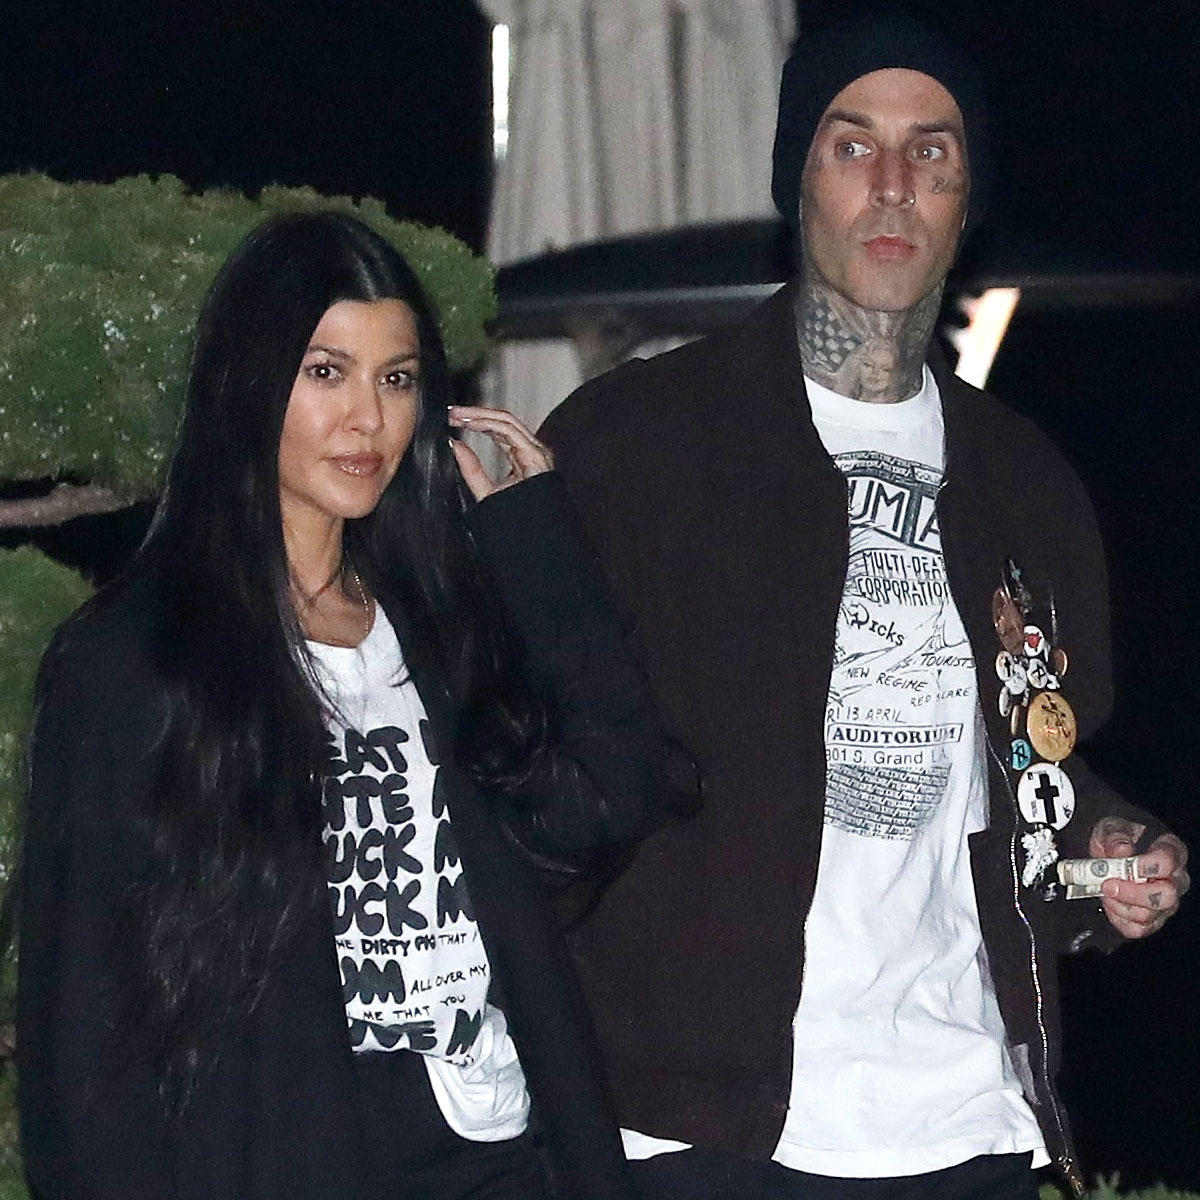 Kourtney Kardashian wears naughty shirt in meeting with Travis Barker